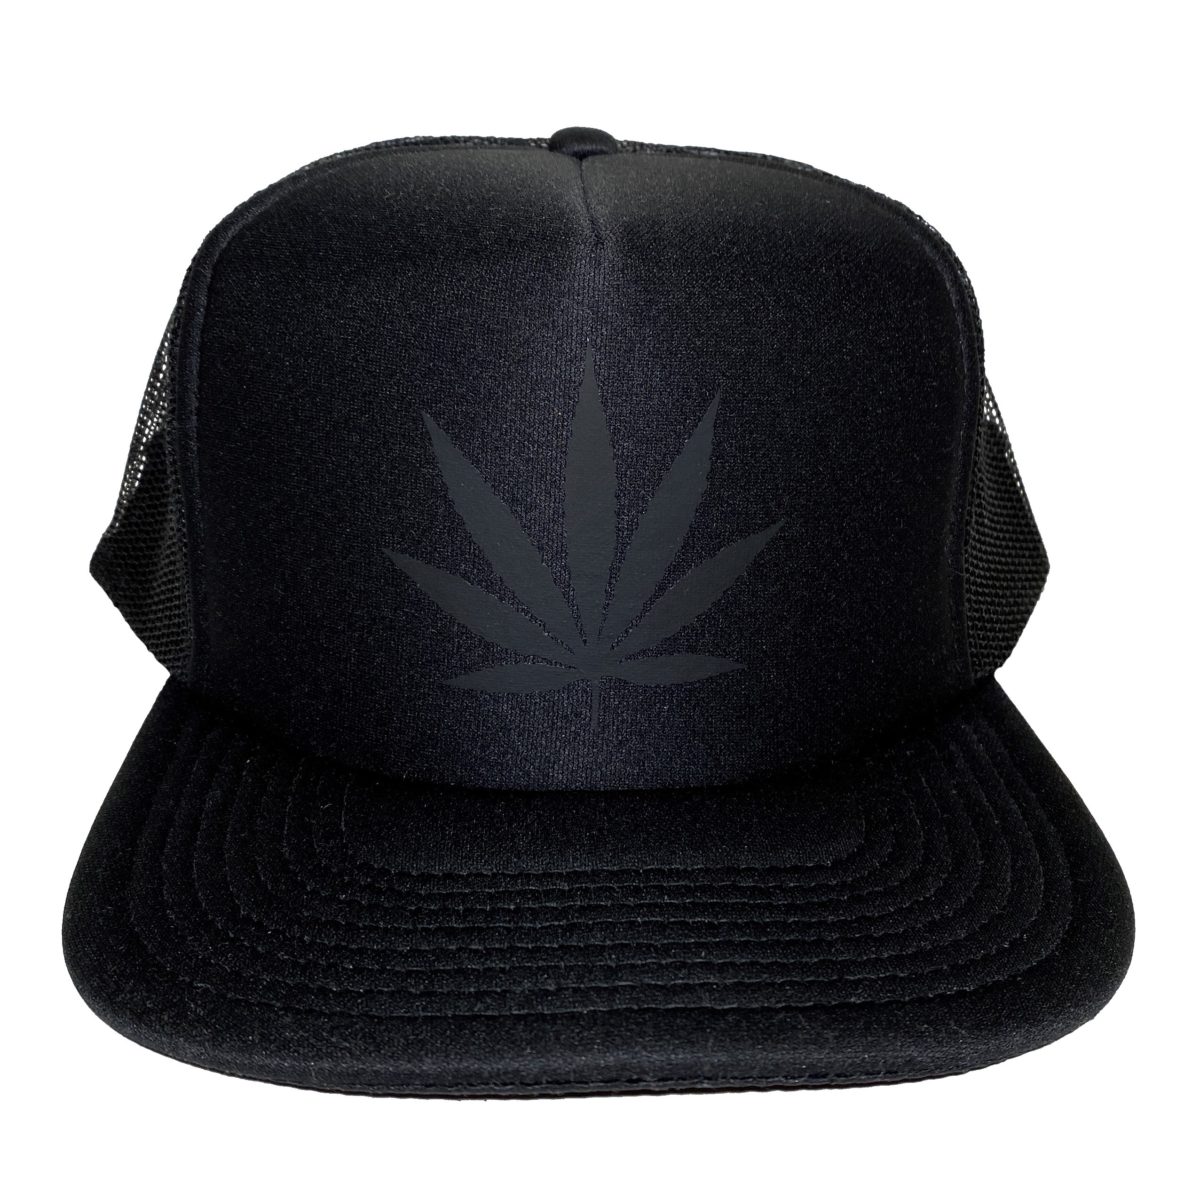 Weed Leaf Trucker Hat Black on Black Front View 2